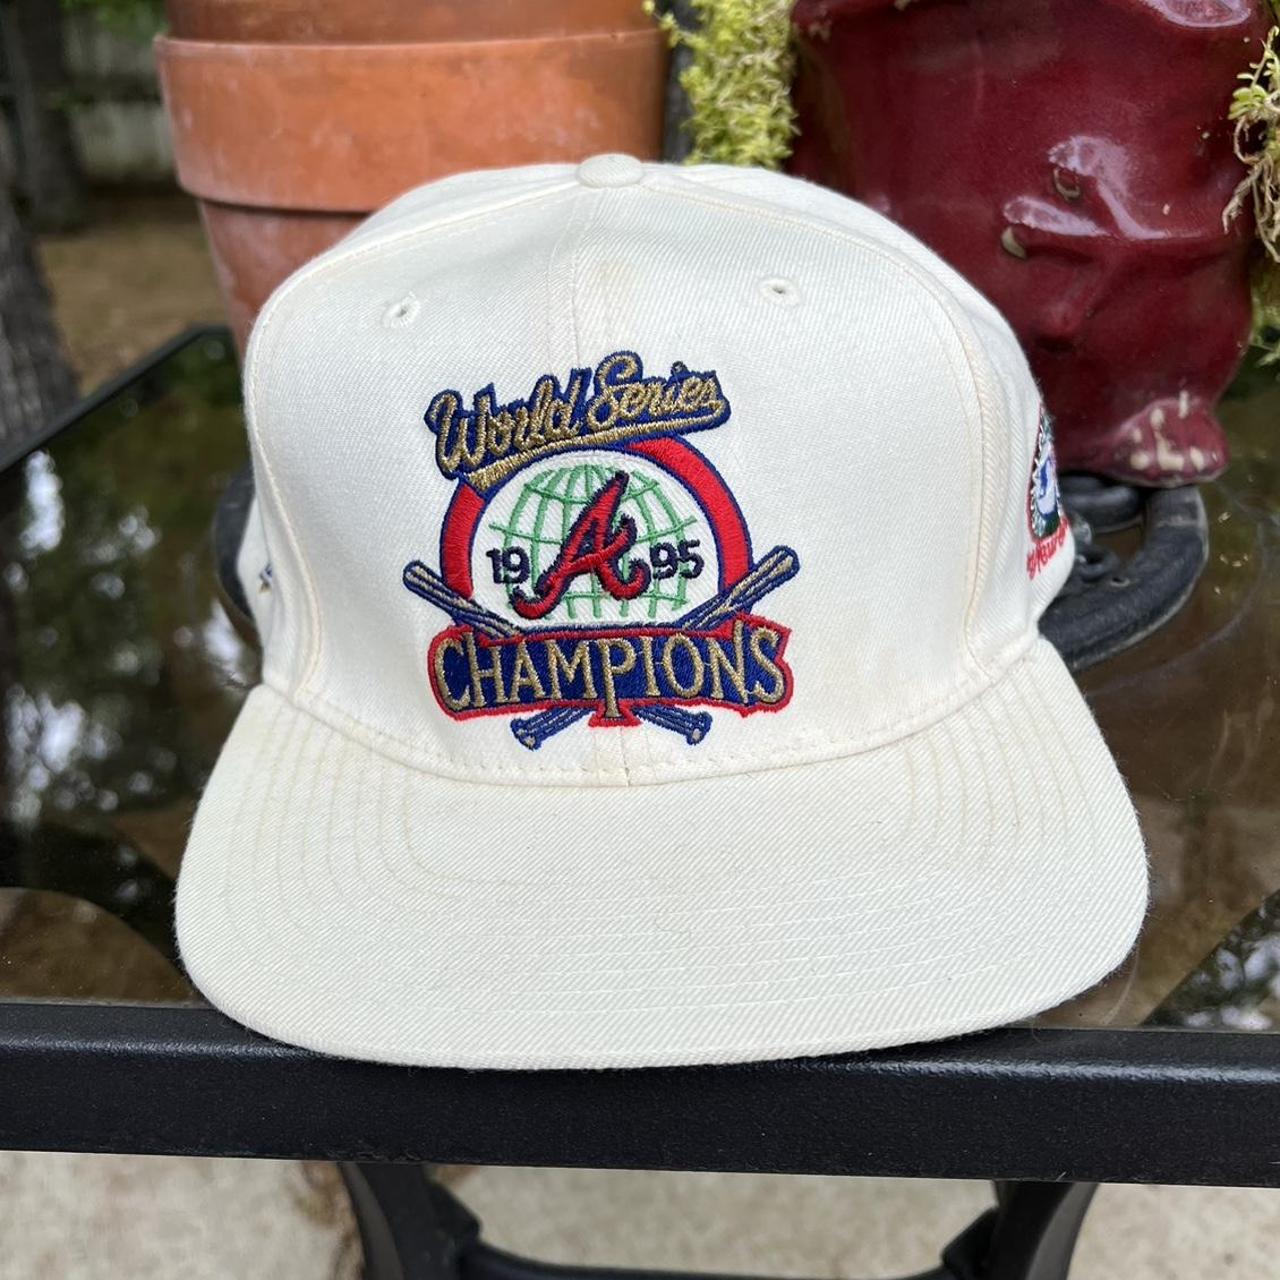 Amazing vintage 90's world series champions cap